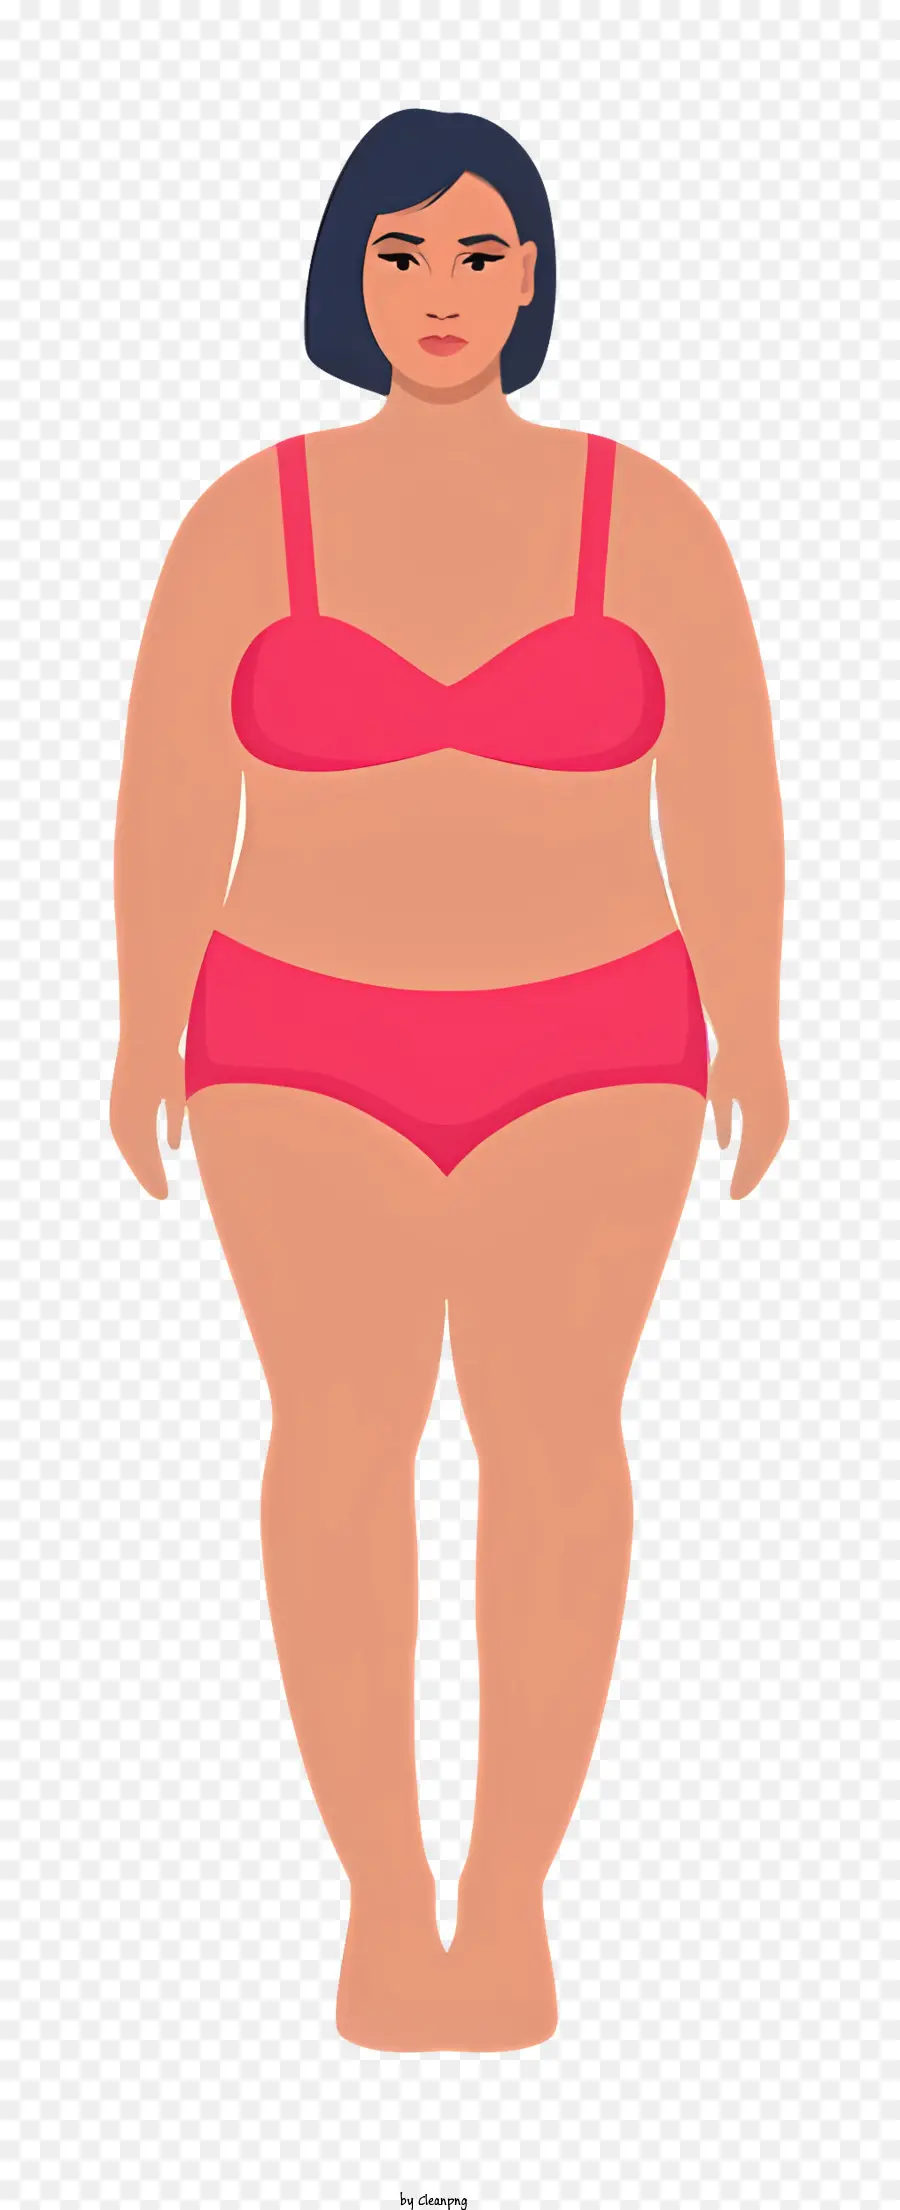 Fette Körperfrau in Bikini rosa Bikini Red Tank Top Slim Körper - Übertriebene, idealisierte Vektor -Illustration der Frau im Bikini